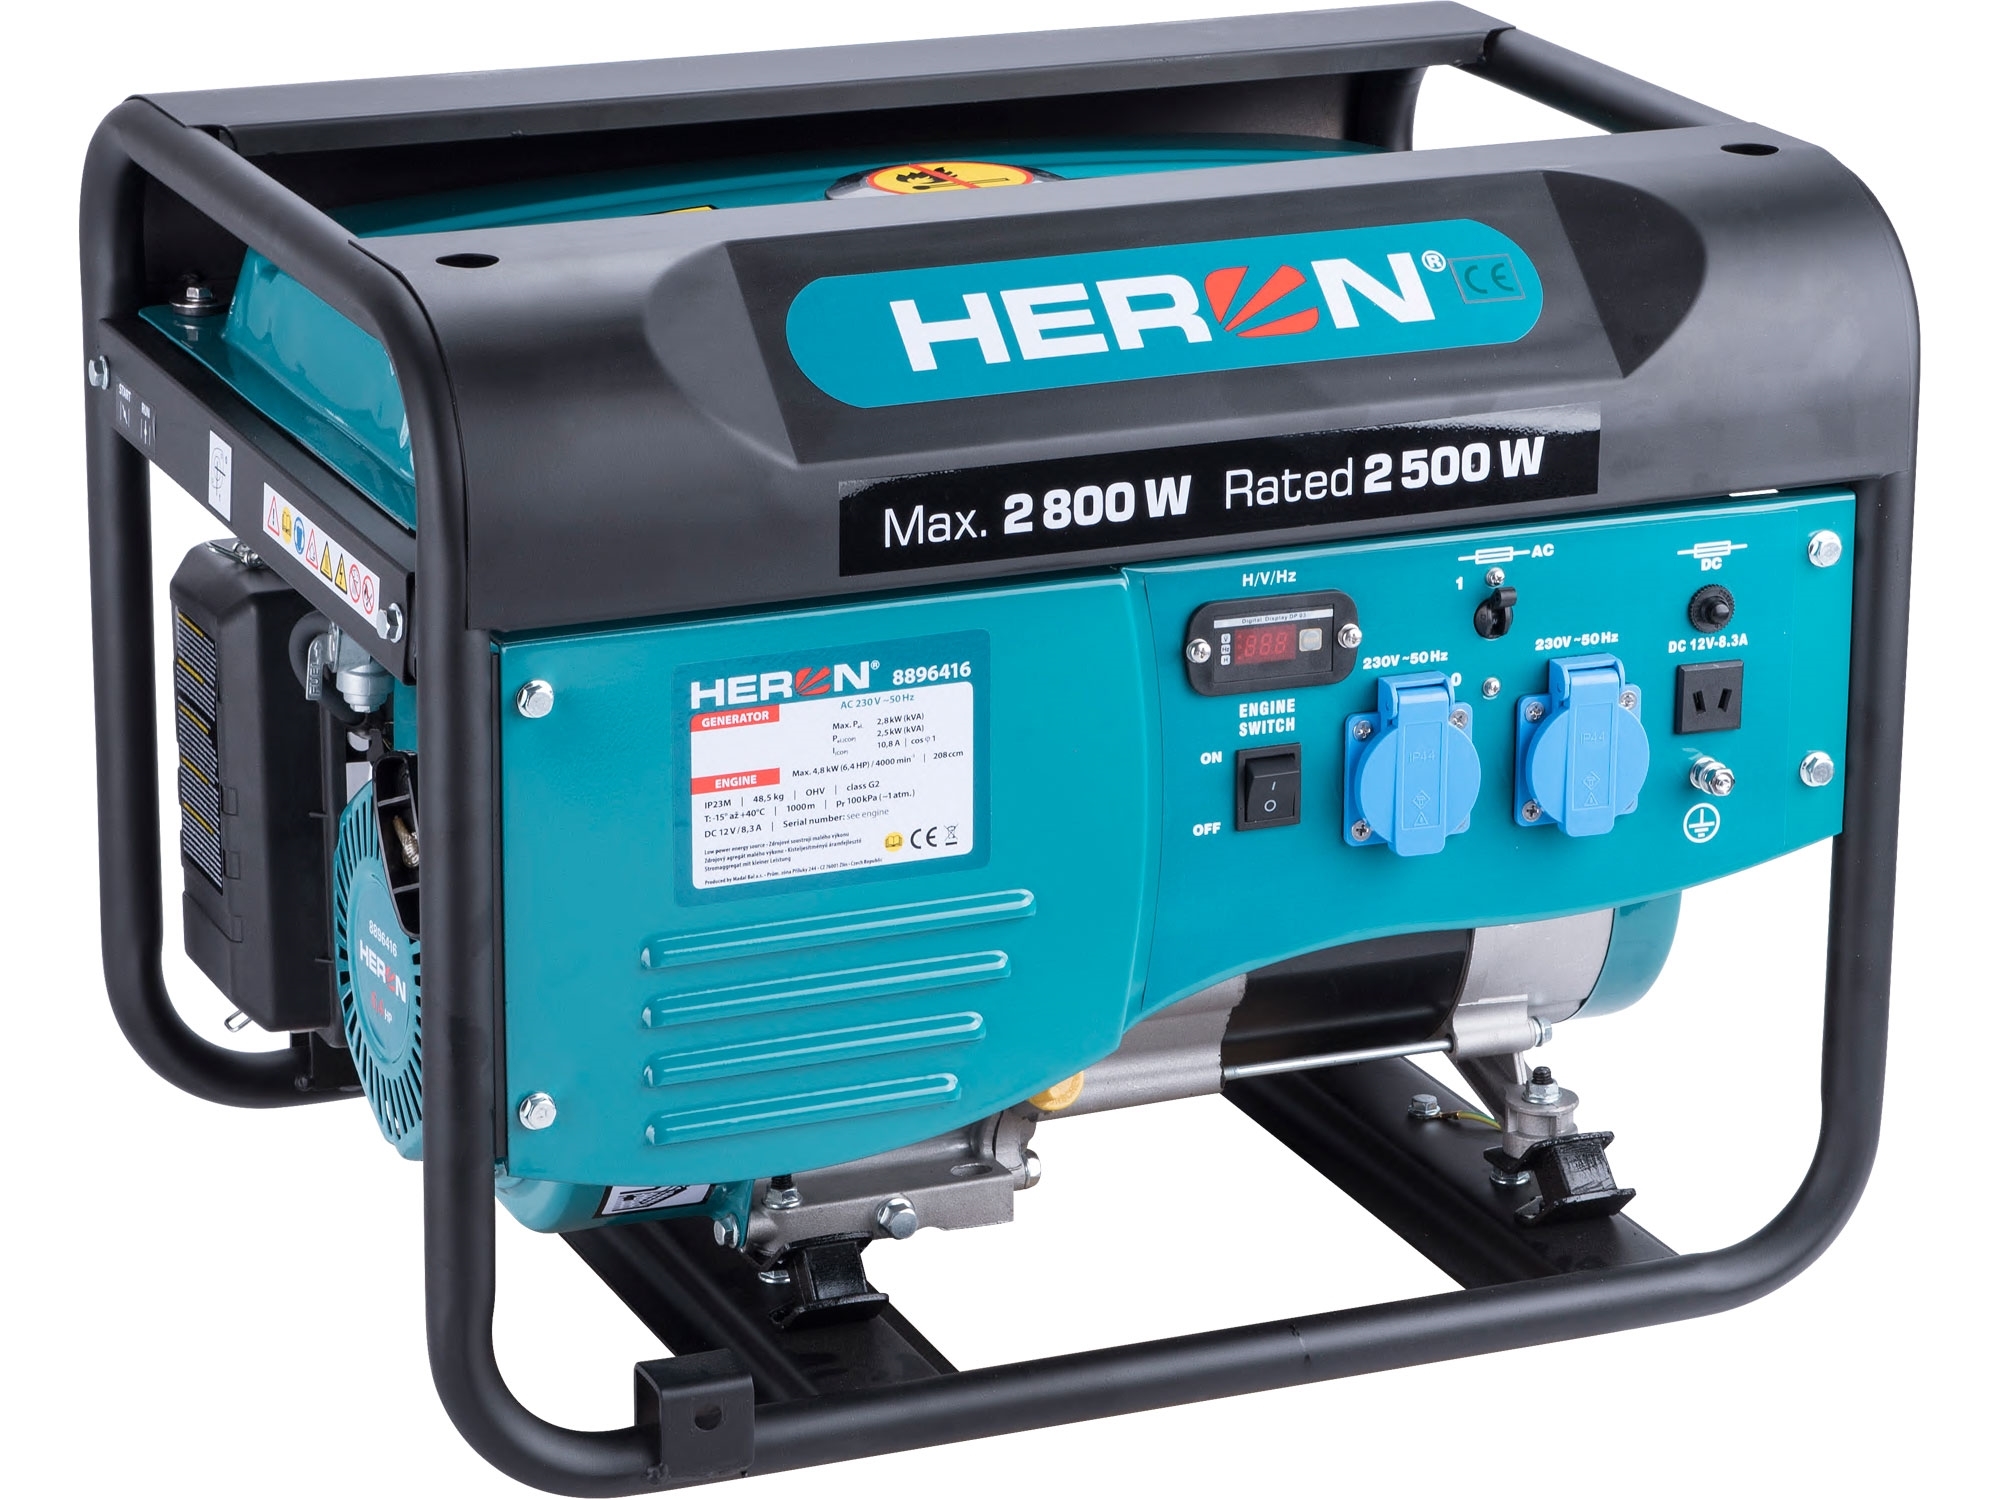 Heron elektrocentrála benzínová 2,8kW/ 6,5HP (8896416)